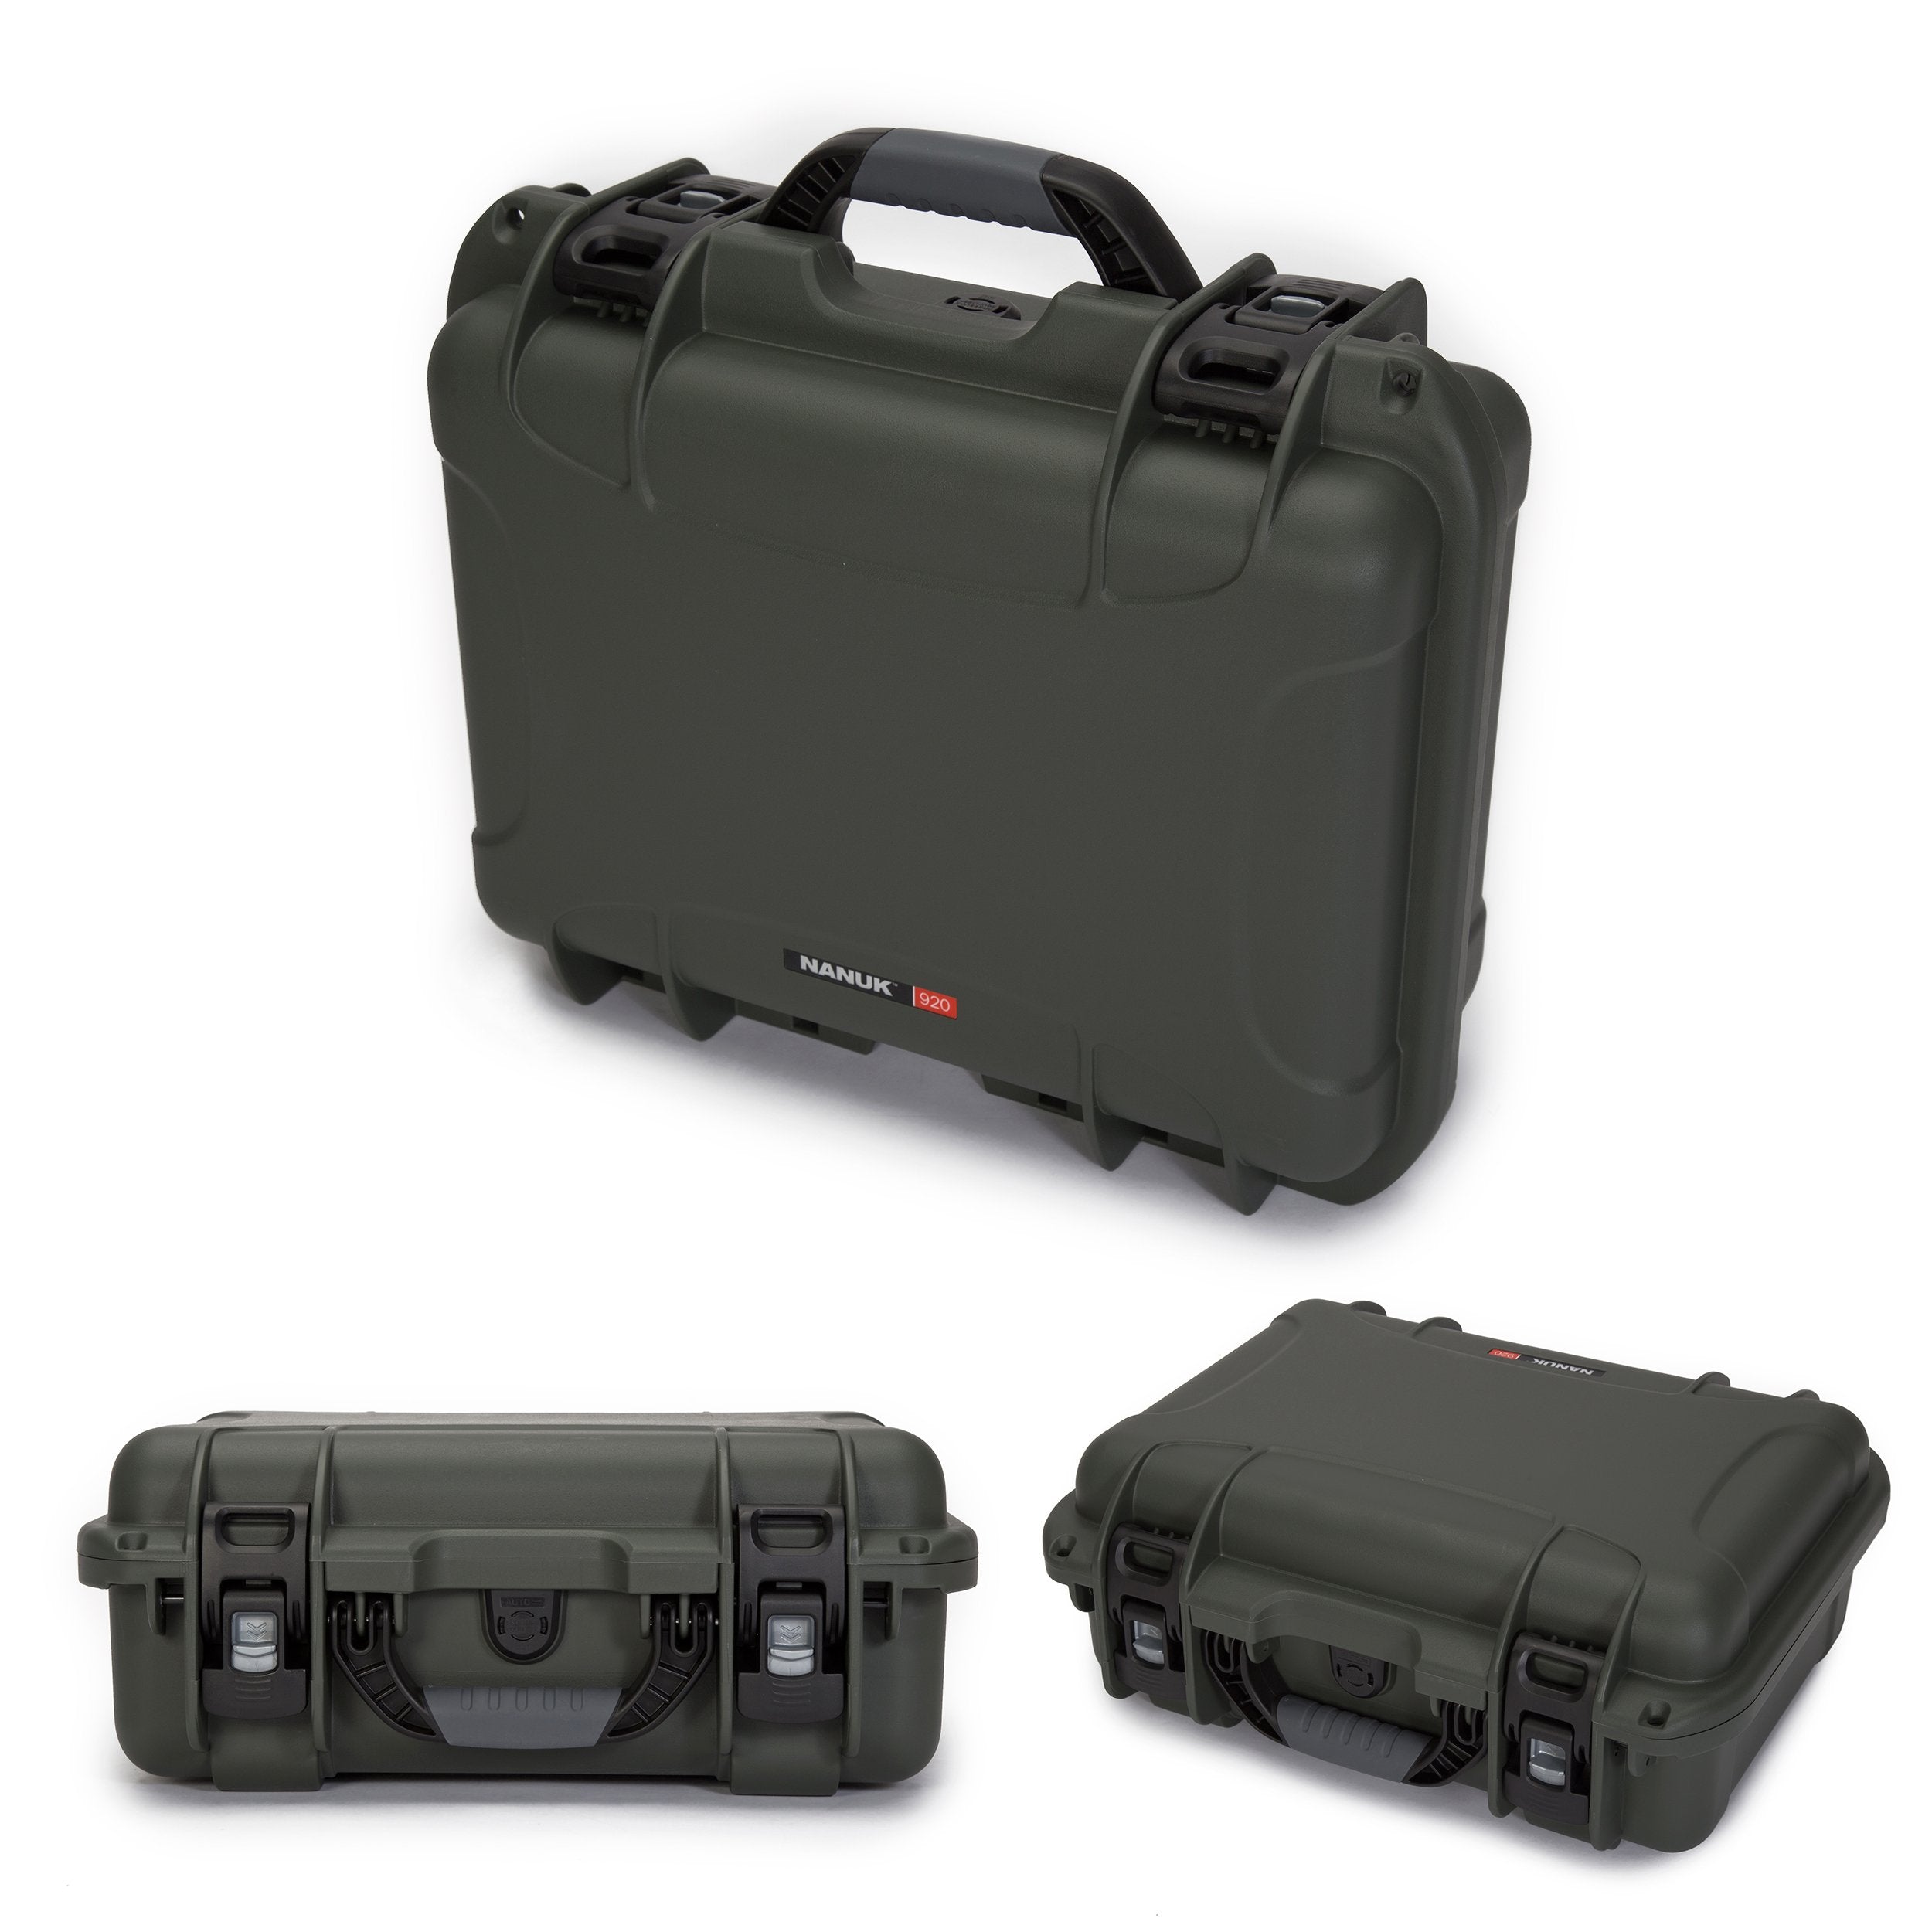 Nanuk DJI Drone Waterproof Hard Case with Custom Foam Insert for DJI Mavic PRO - Olive